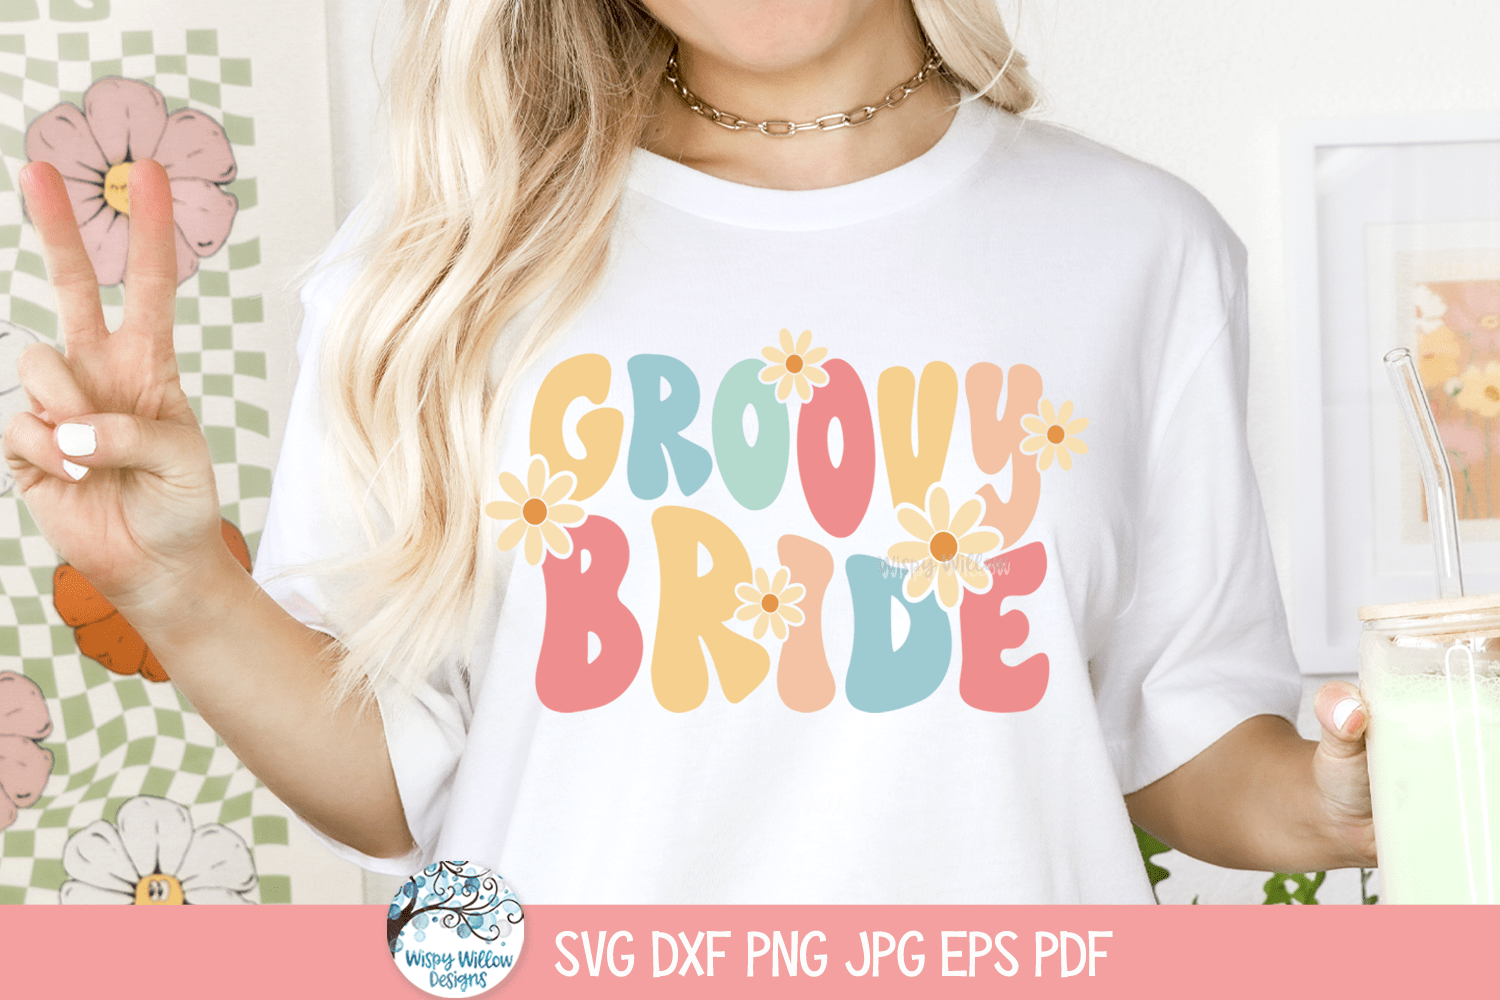 Groovy Bride SVG | Vibrant Retro Wedding Party Design Wispy Willow Designs Company